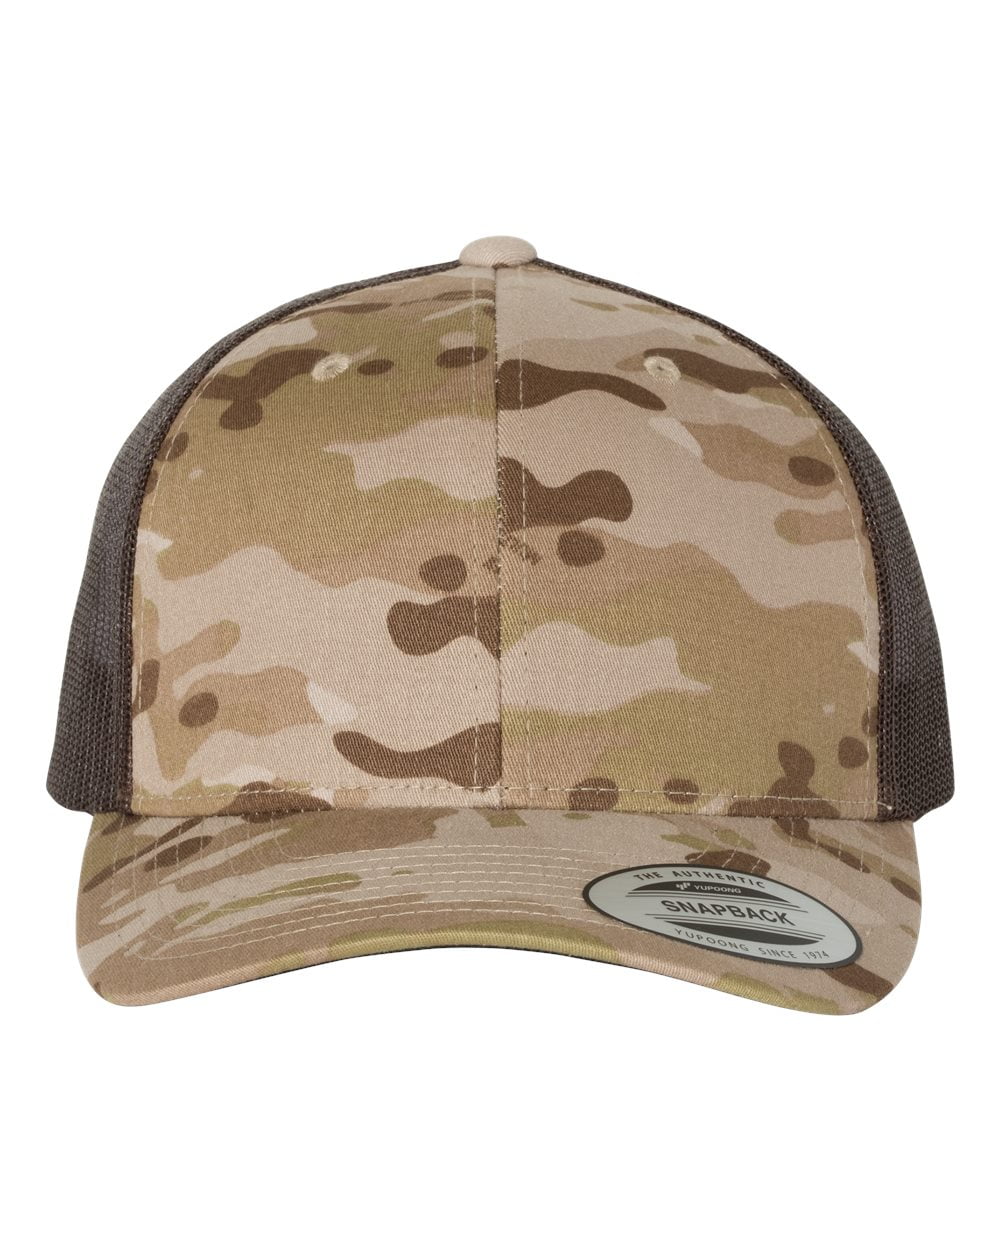 Realtree Woodland Army Camouflage Camo Carp Carping Fishing Hat Summer HEAT Cap 